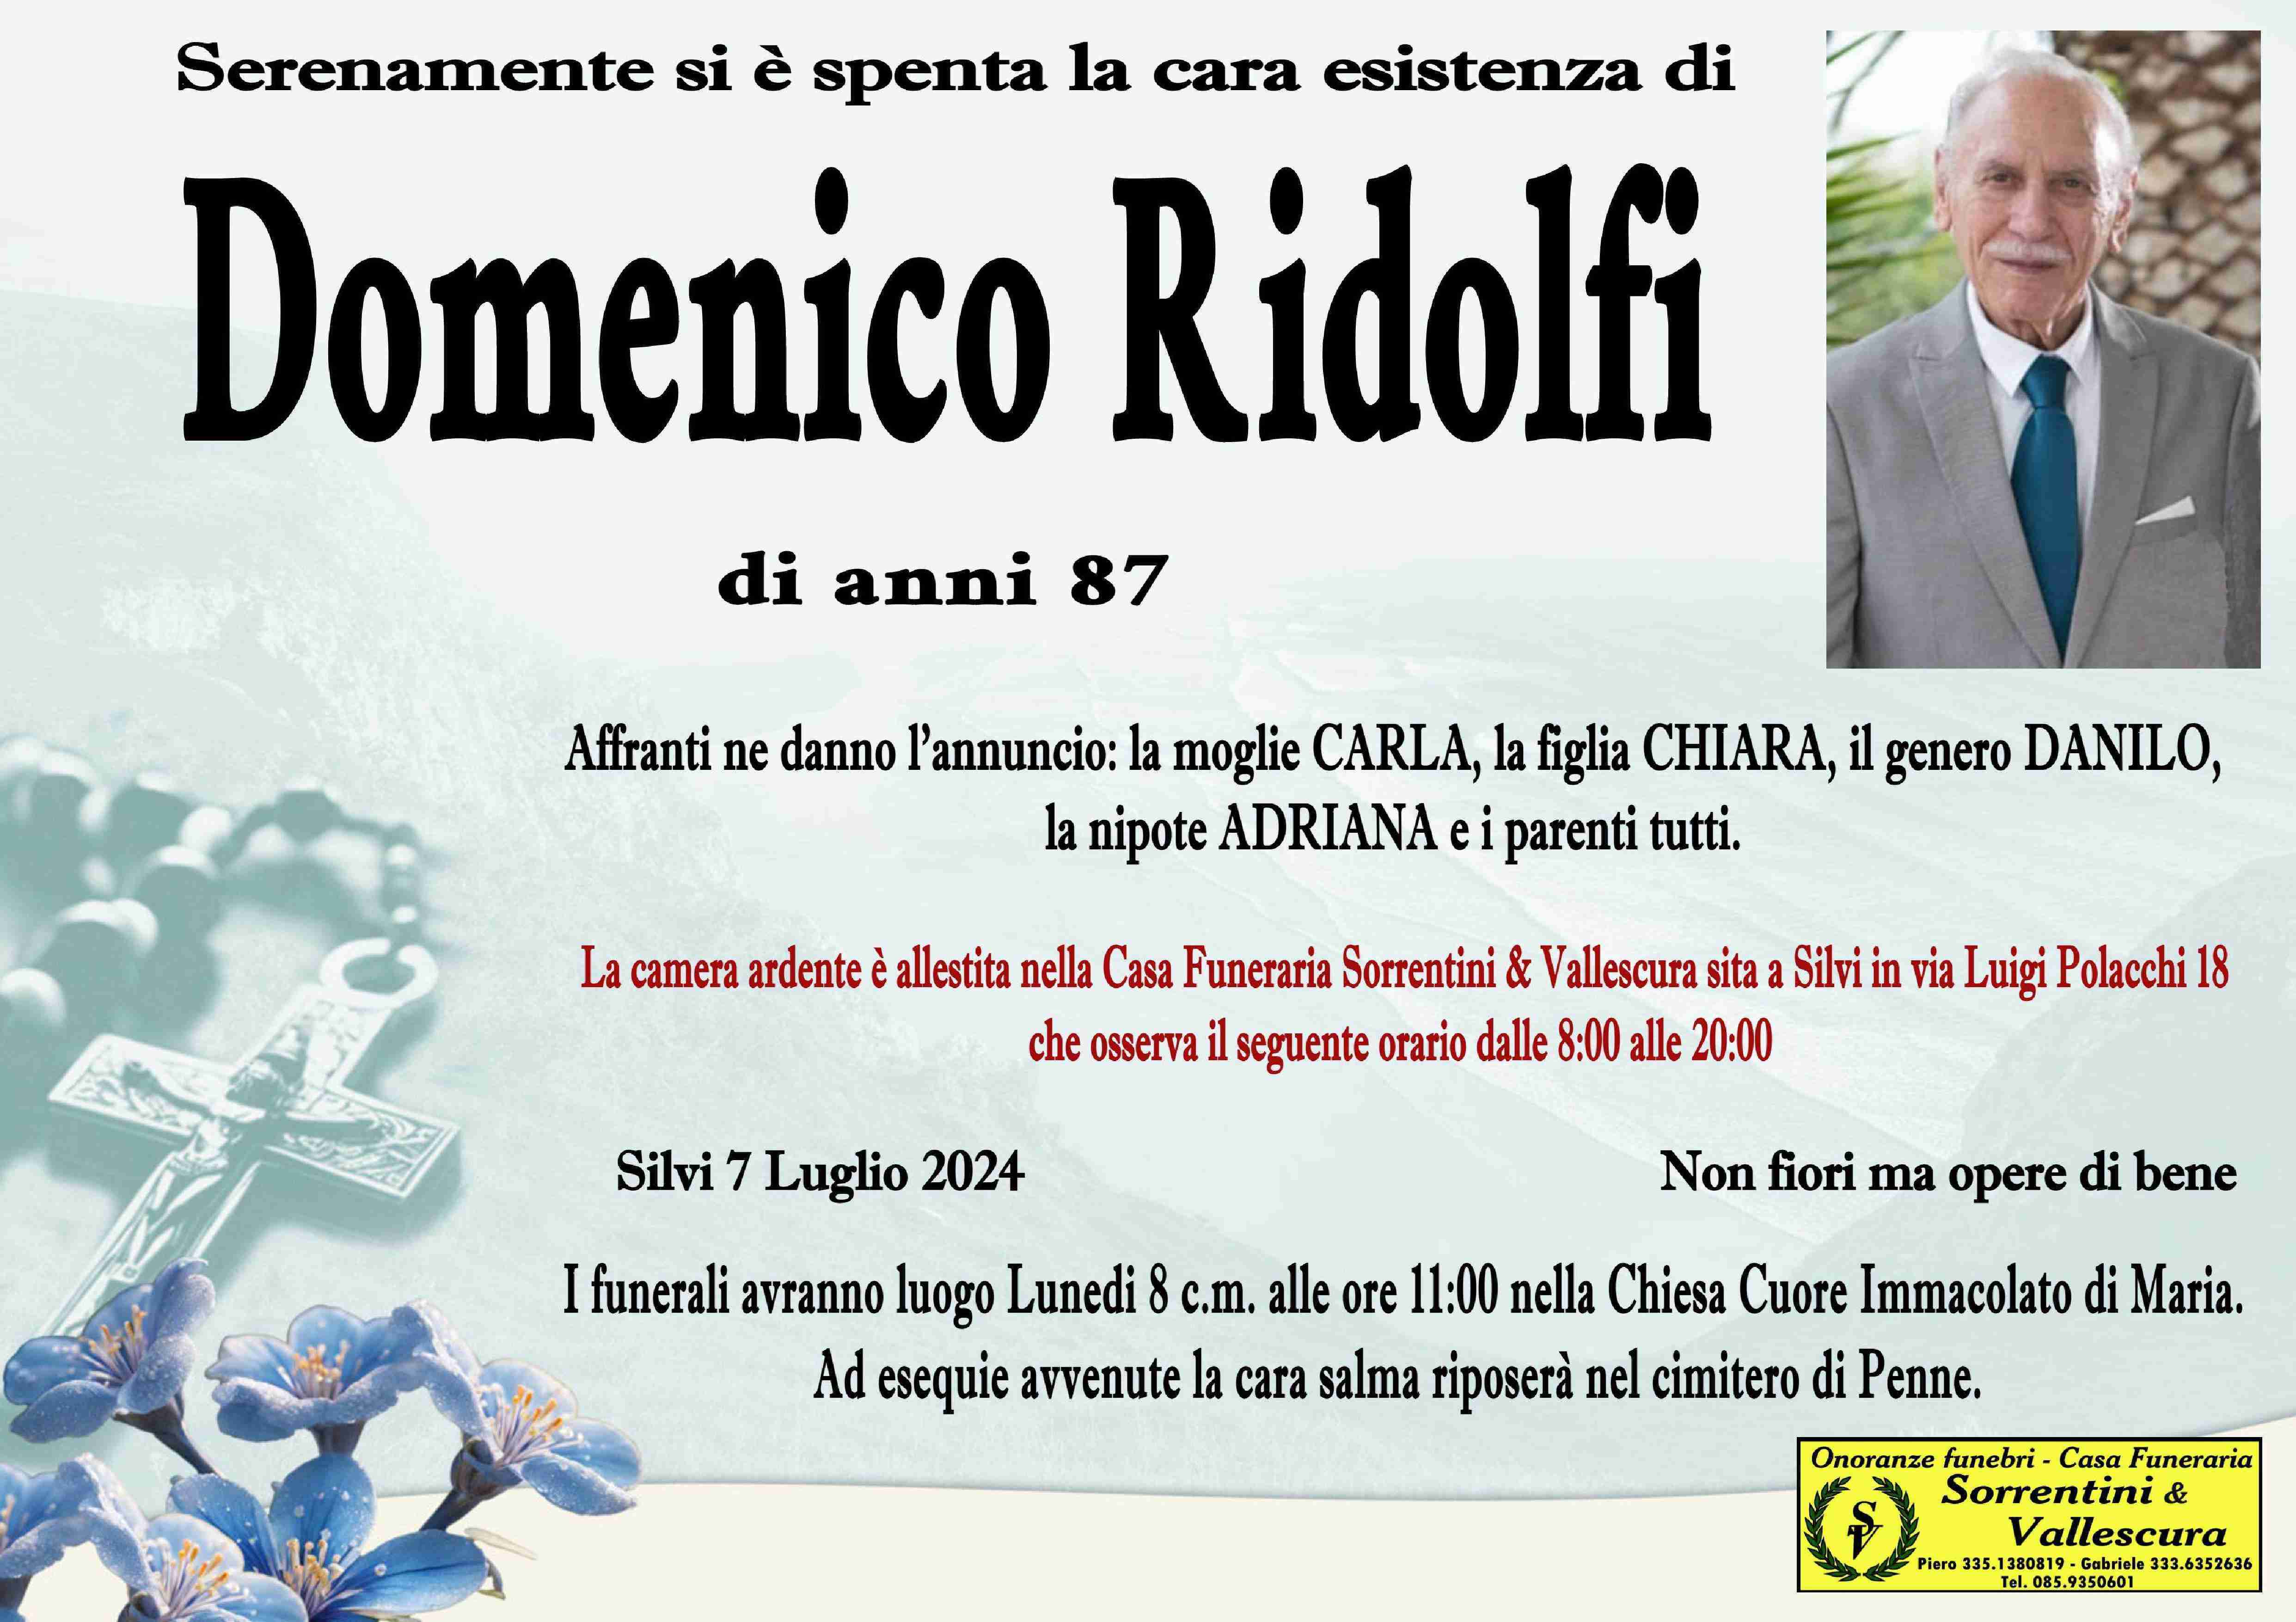 Domenico Ridolfi